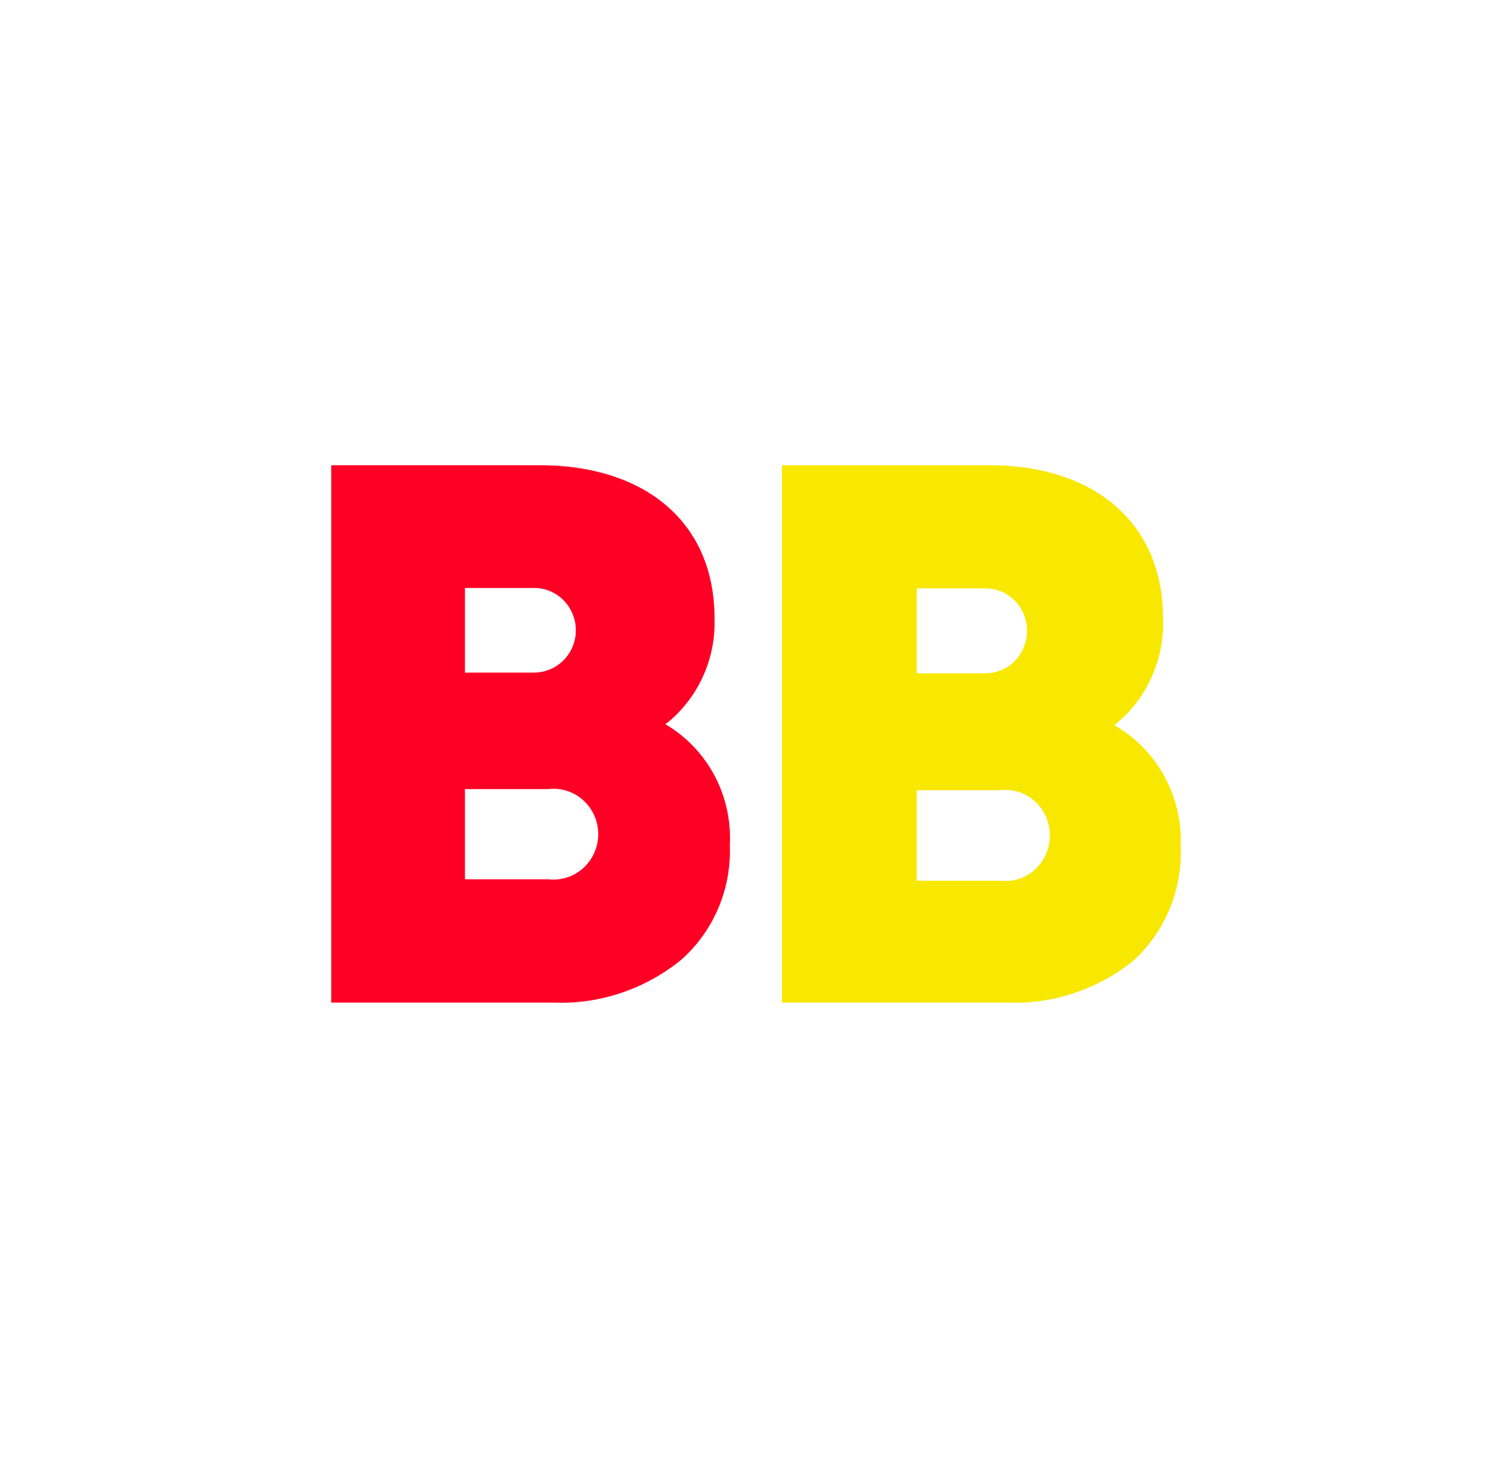 betboom-logo